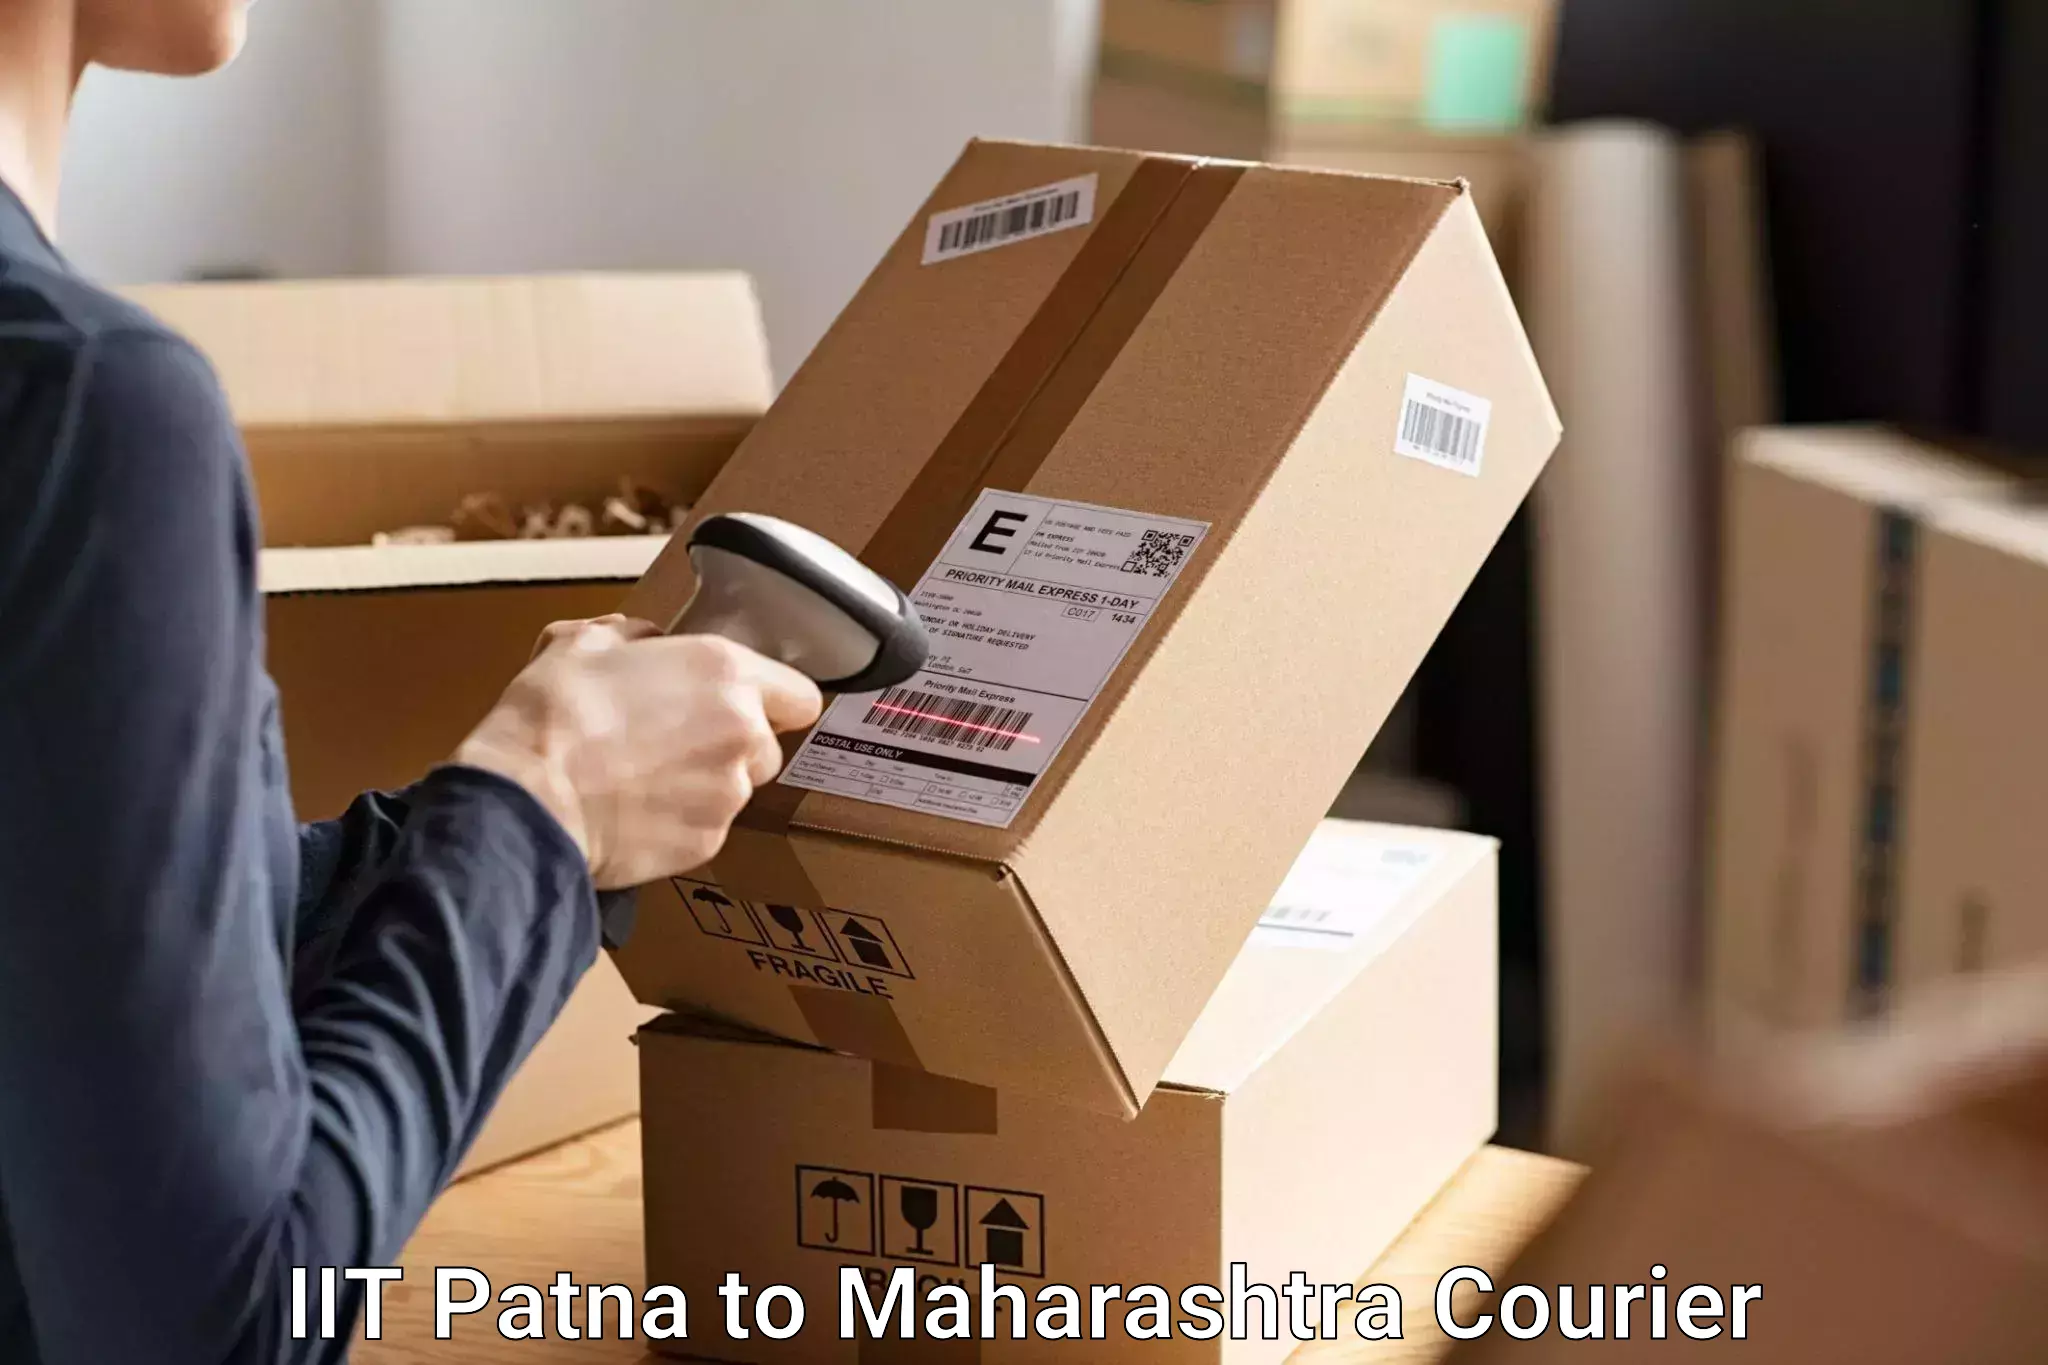 Luggage shipment processing IIT Patna to Maharashtra